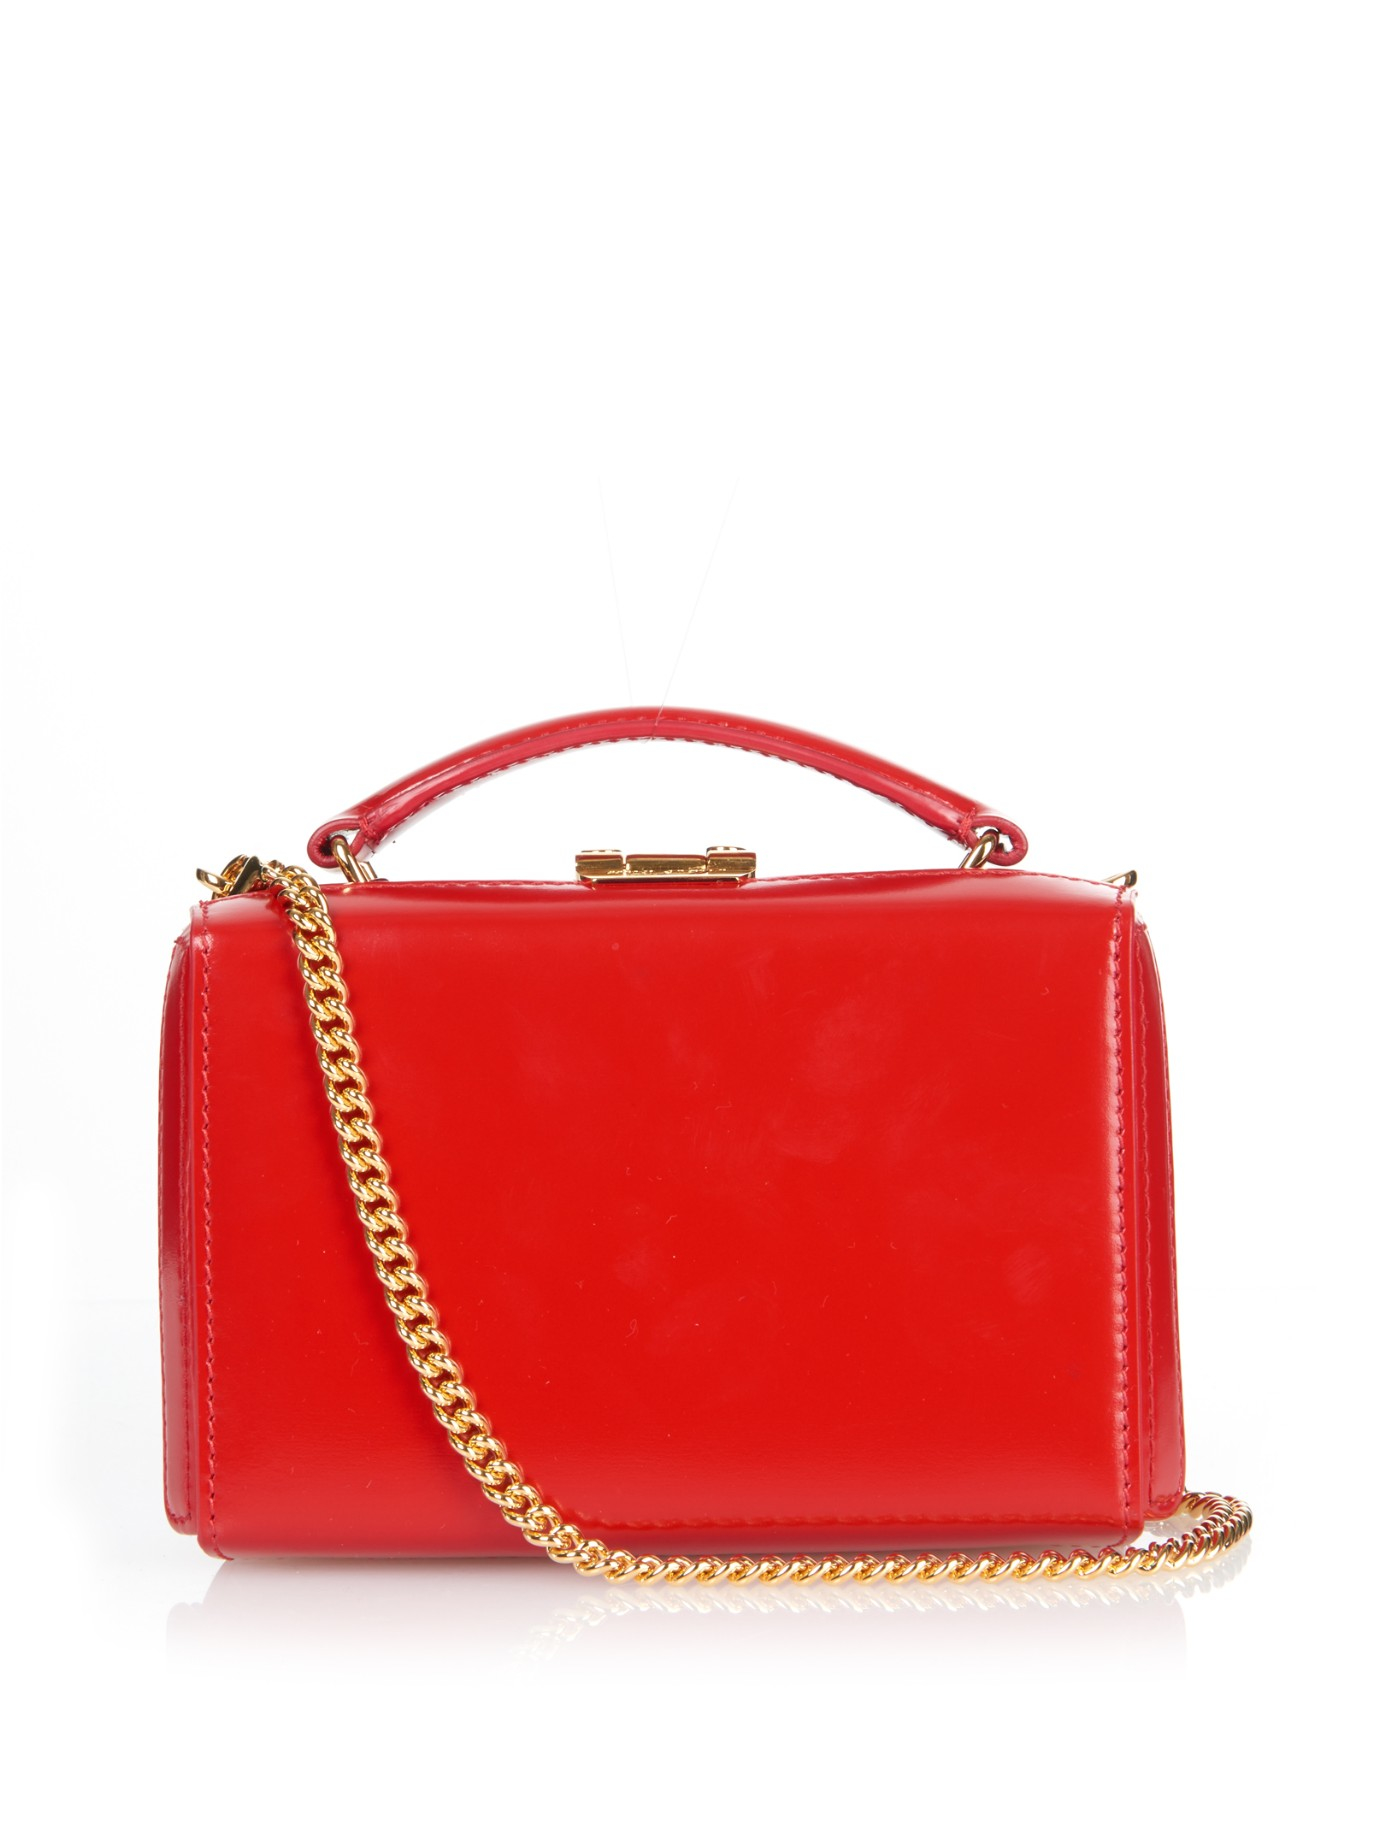 Mark Cross Grace Mini Leather Box Bag in Red - Lyst